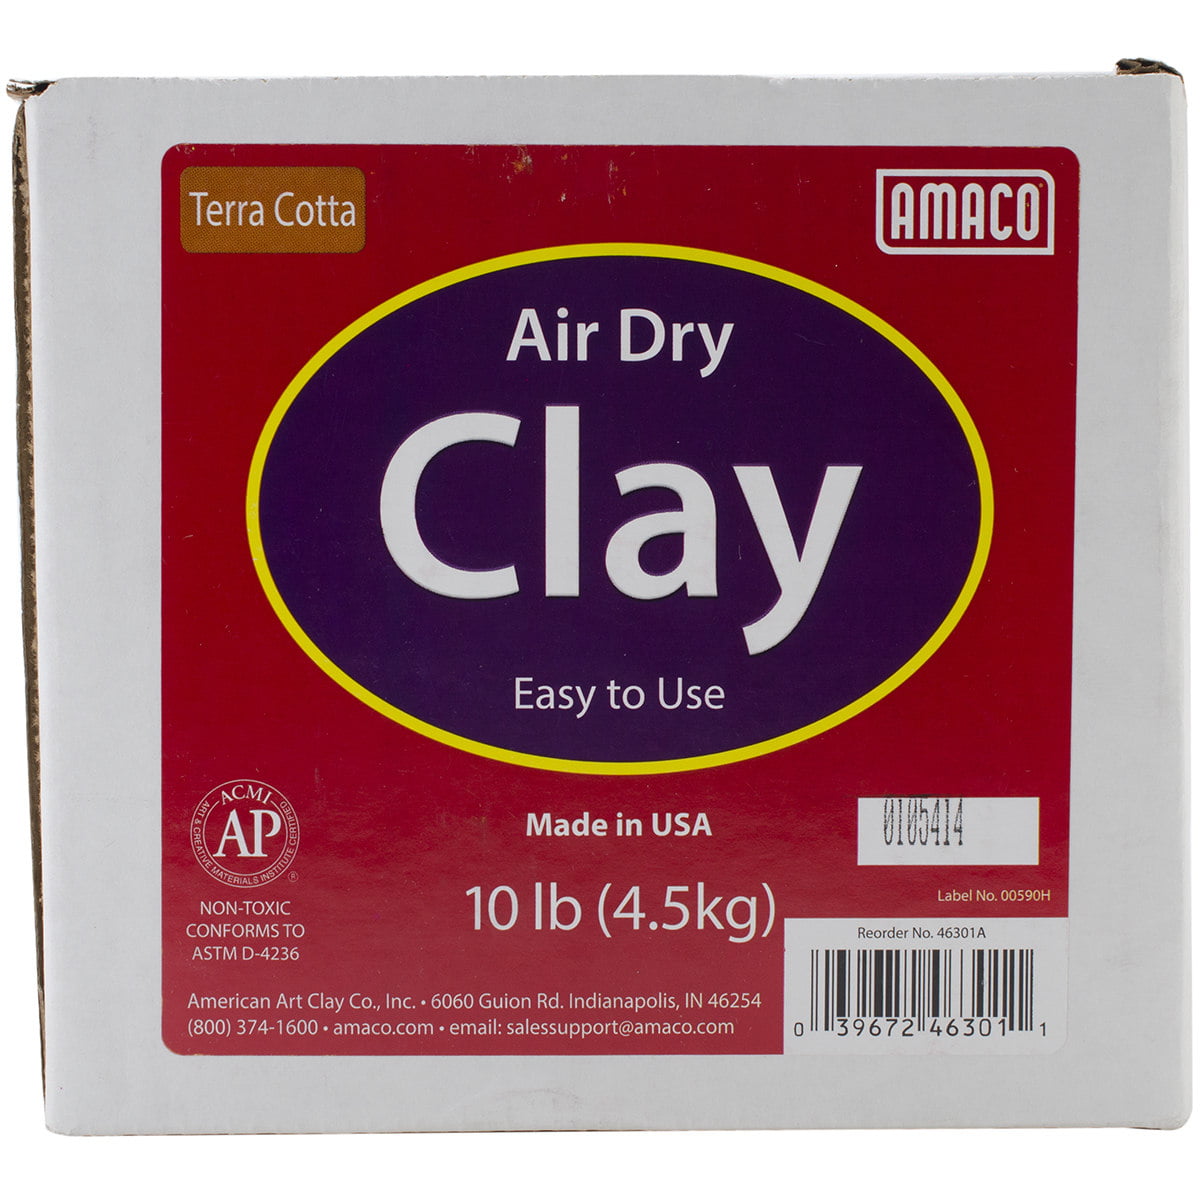 Koralakiri Modeling Magic Clay Kit - 36 Colors Air Dry Clay for